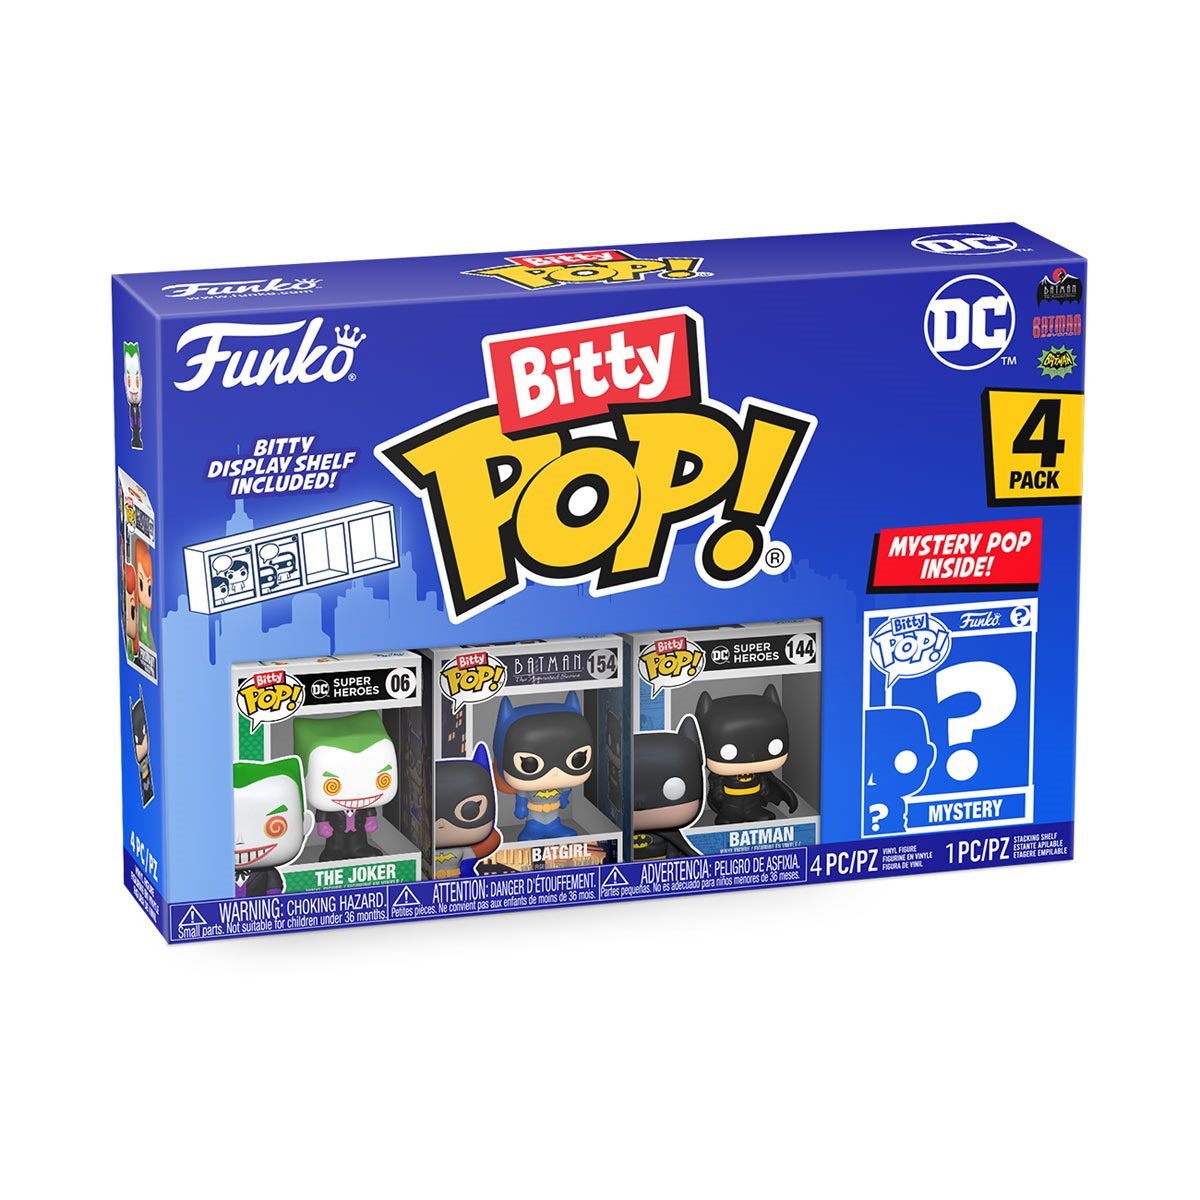 Funko Bitty Pop: DC - Joker 4 Pack